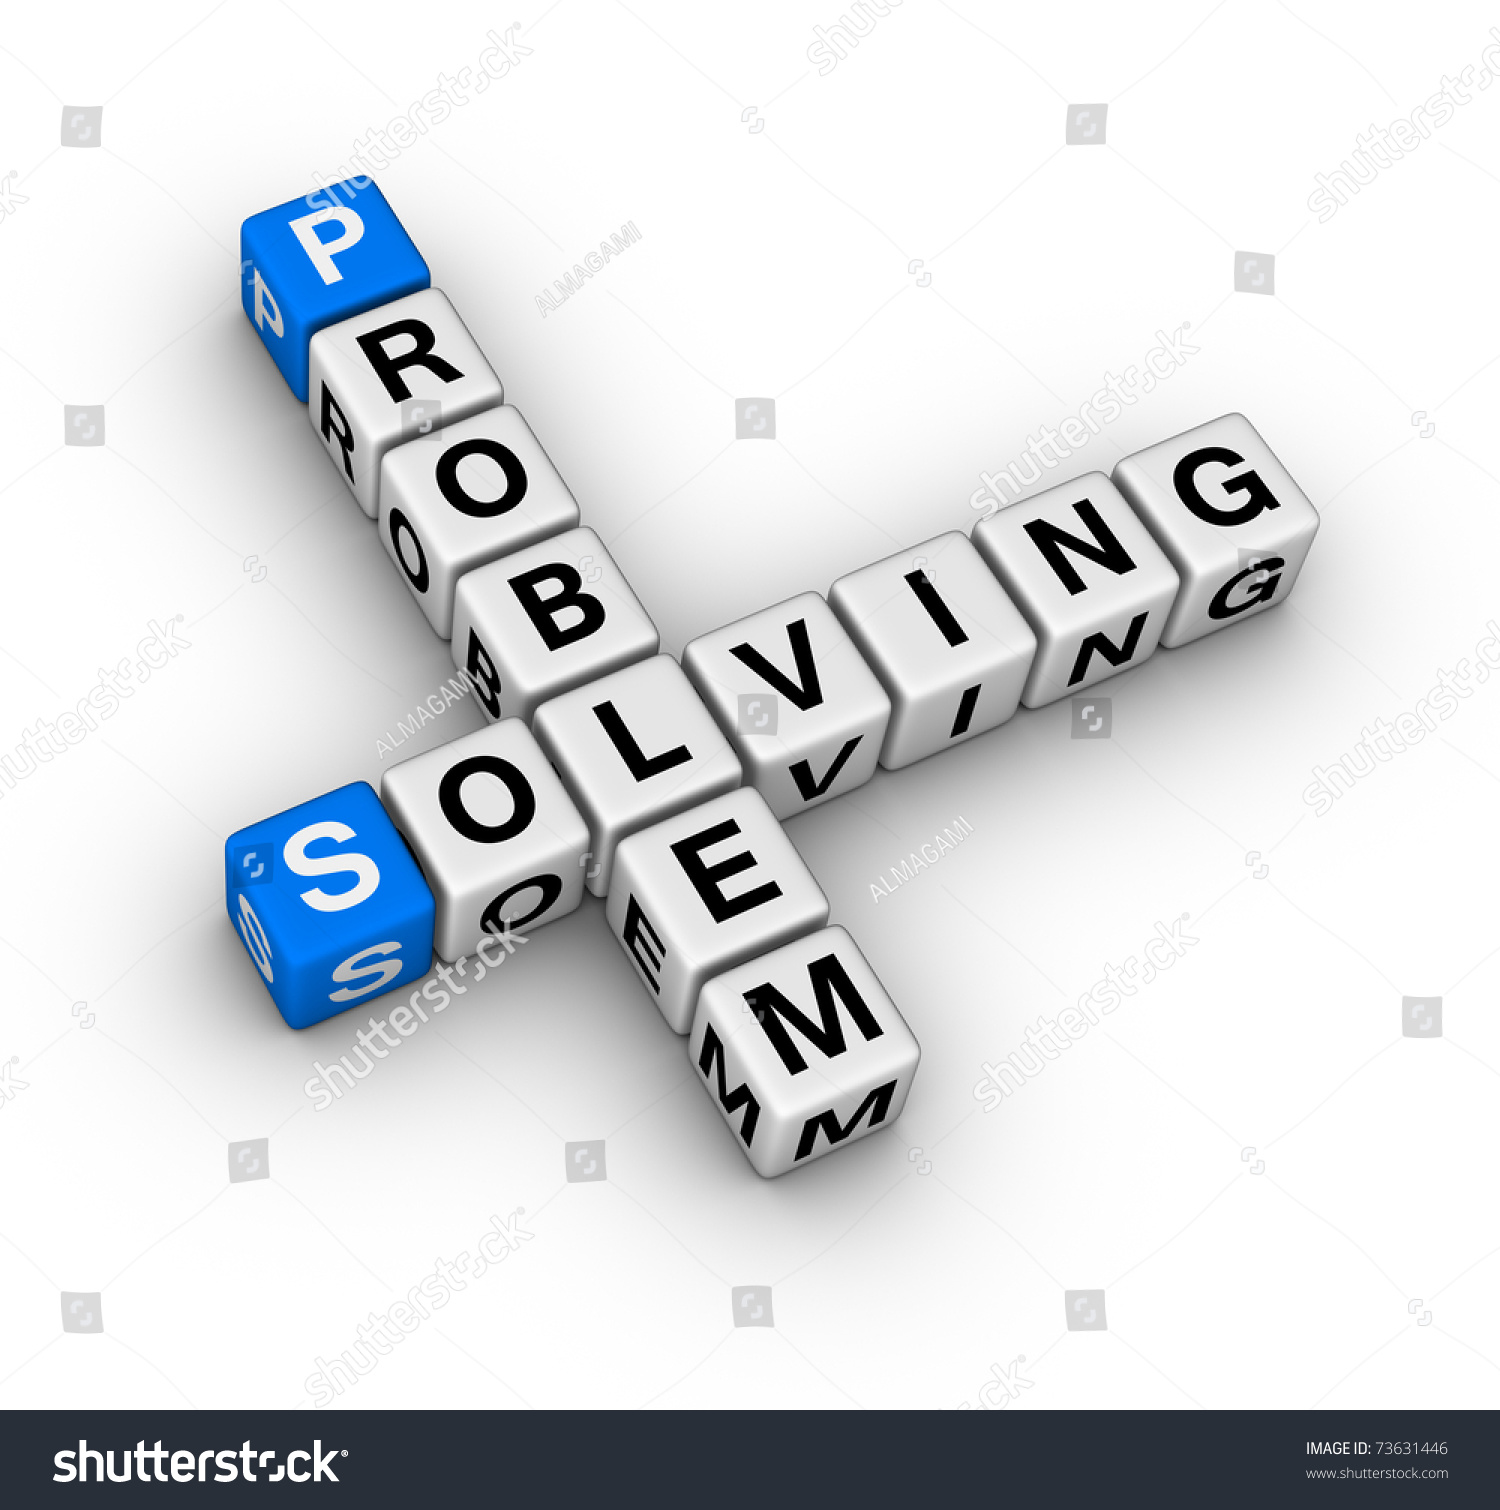 Problem Solving Crossword Stock Photo 73631446 : Shutterstock